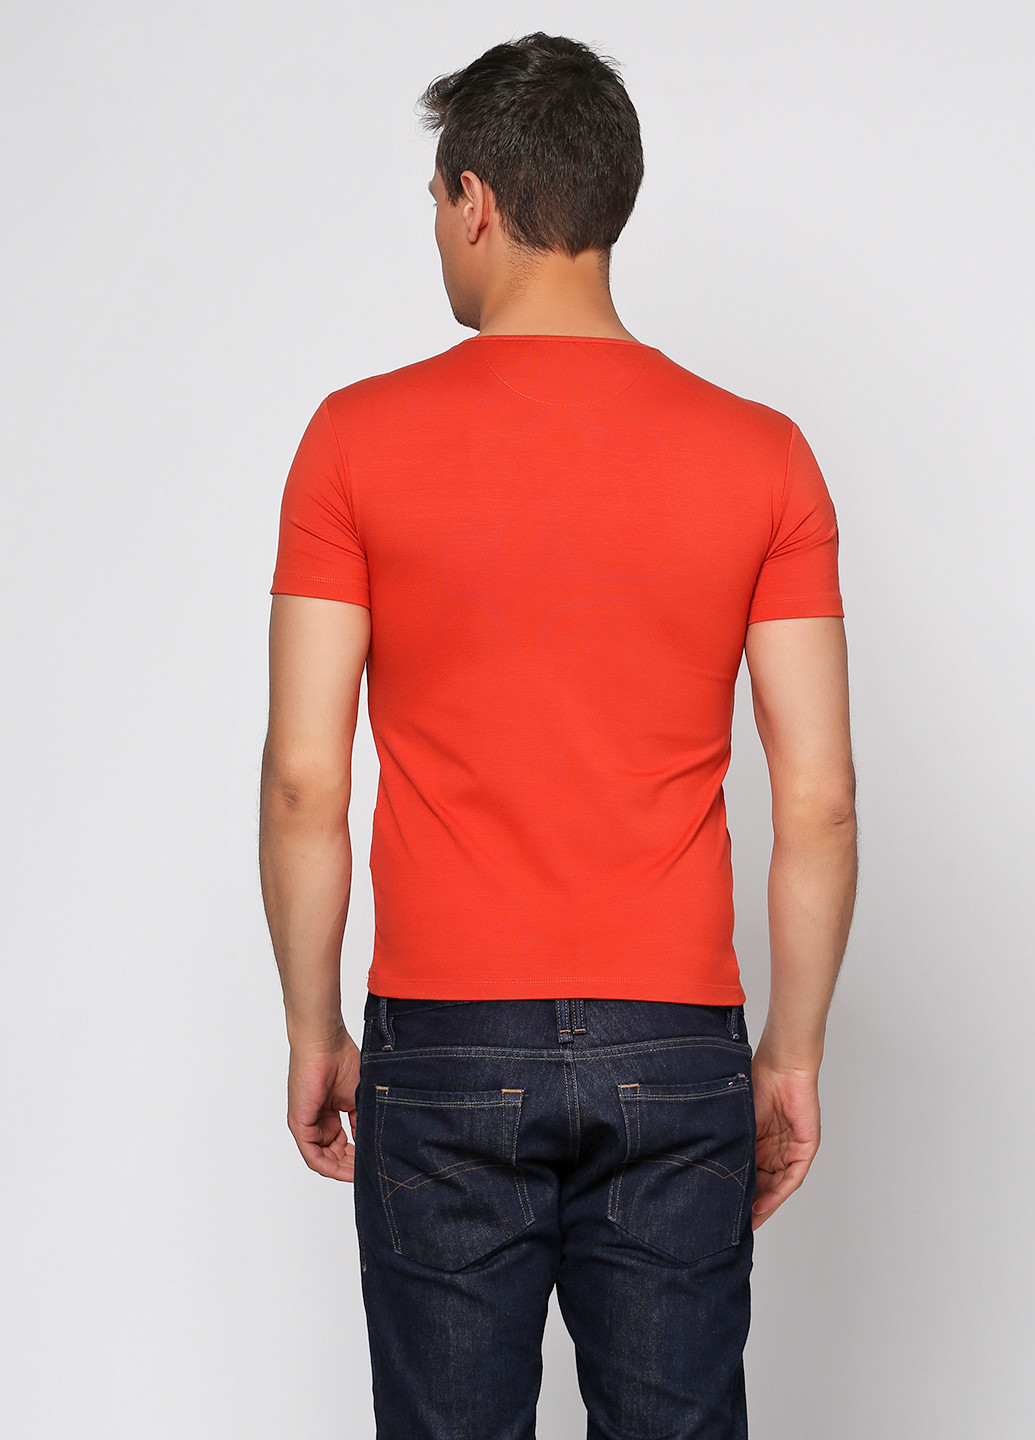 Оранжевая футболка MAKSYMIV